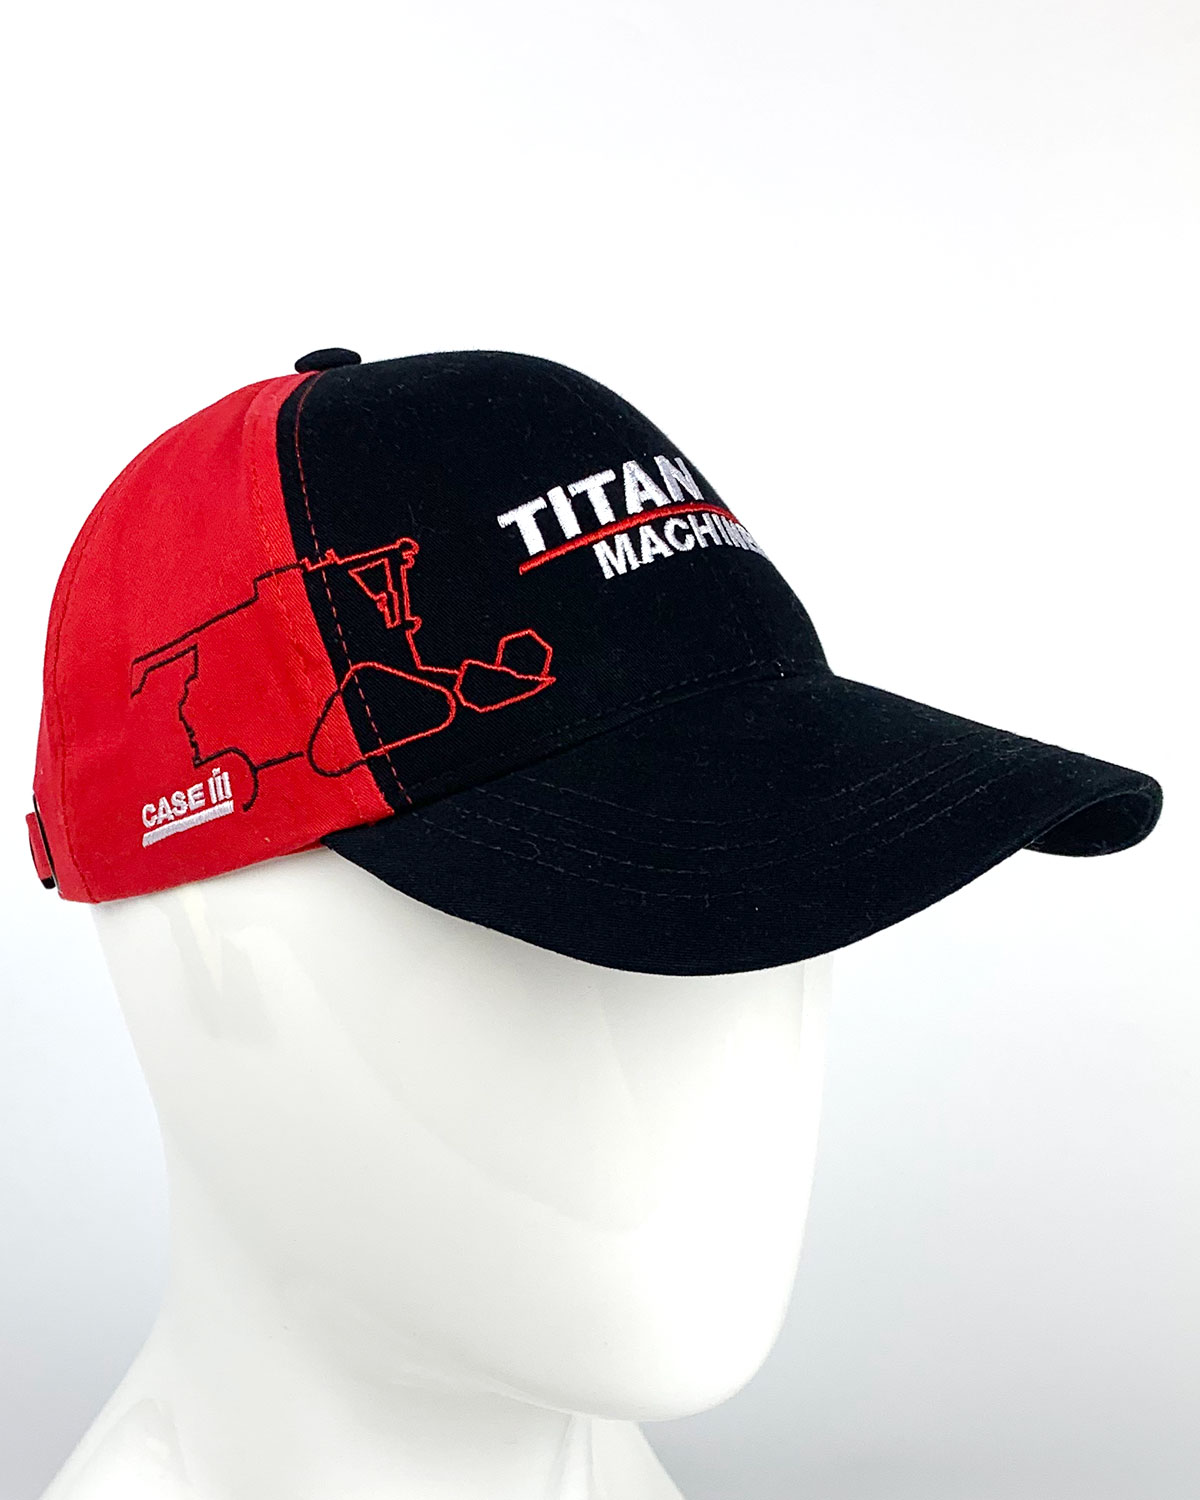 Кепка с логотипом Titan Red. Производство кепок оптом, сшить бейсболку на заказ.